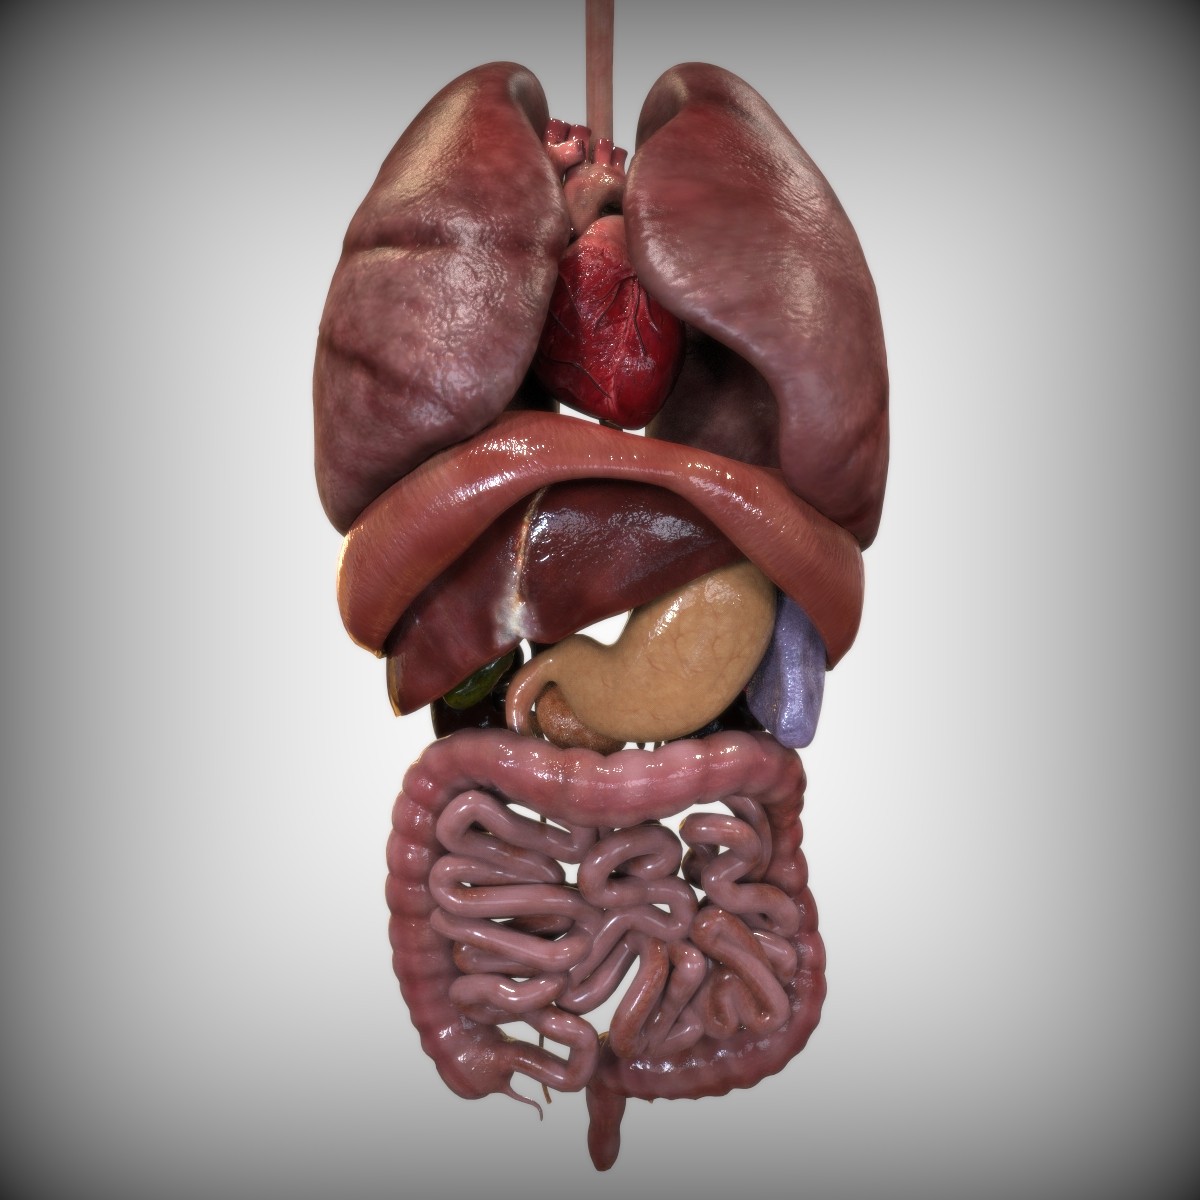 Male Internal Organs Anatomy / large Human Male Internal Organs 3D